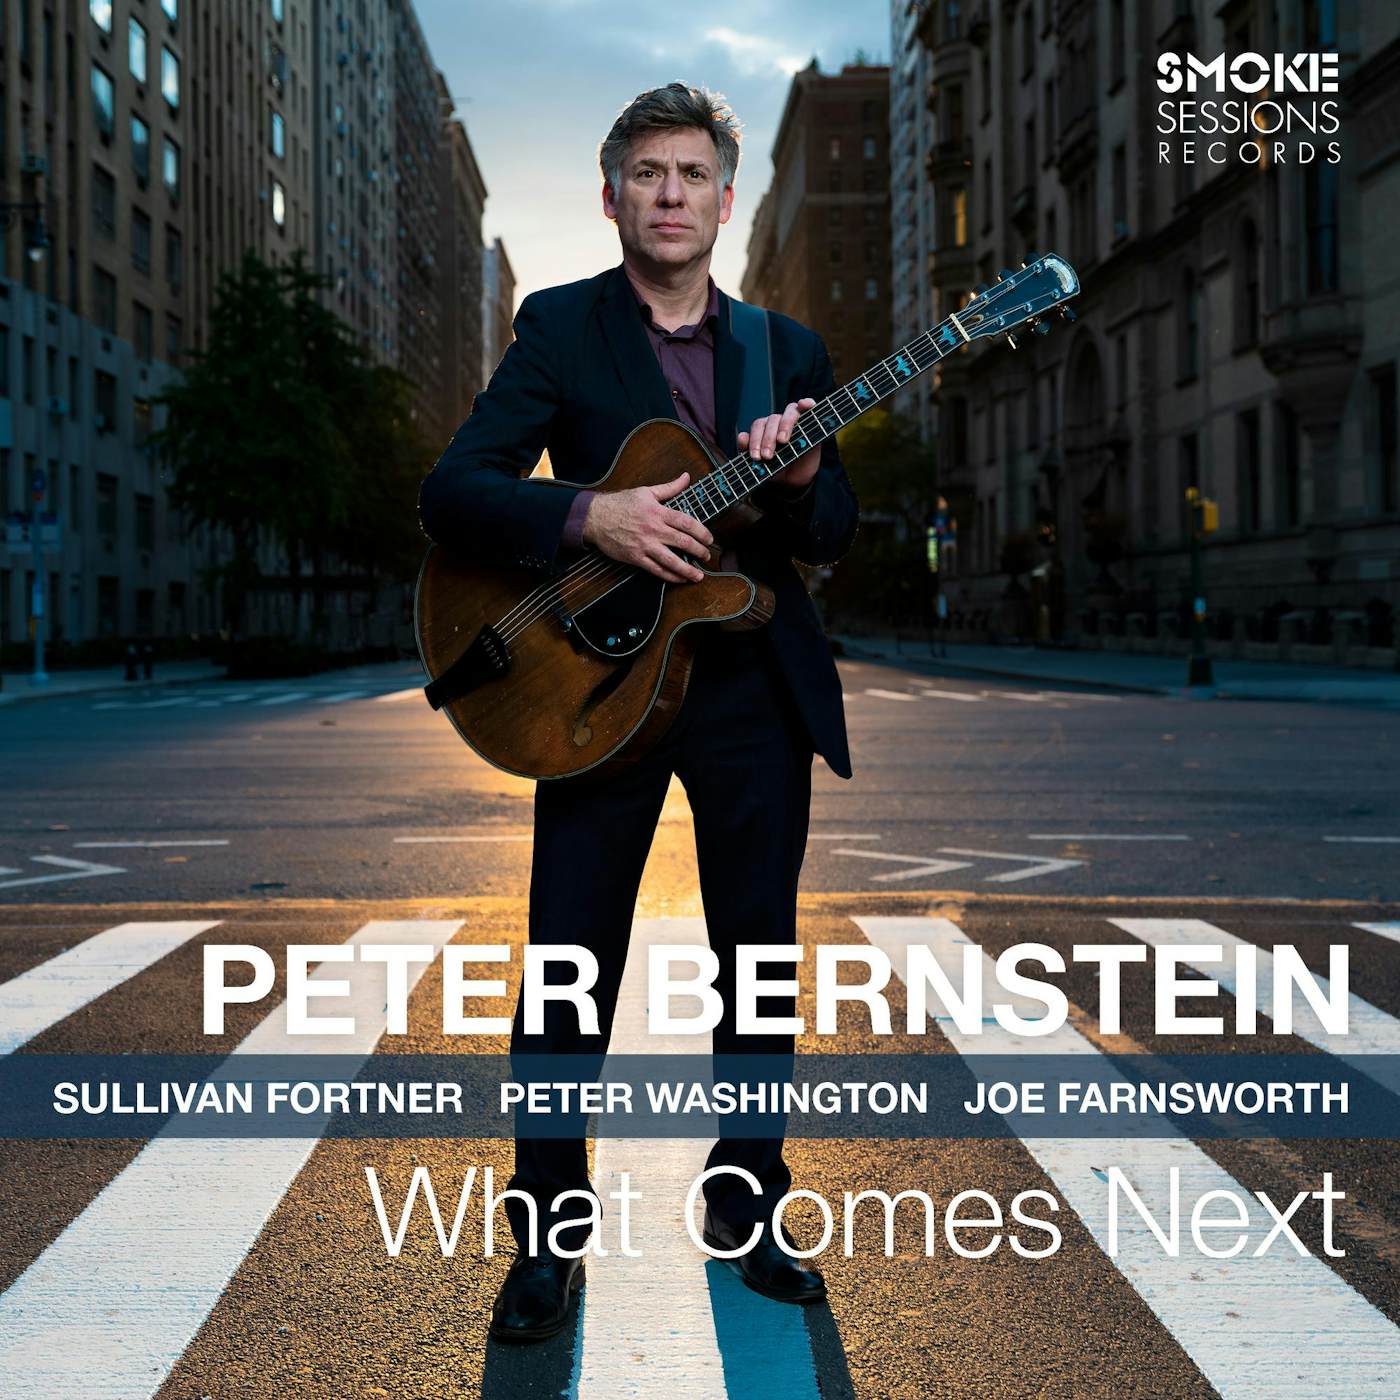 Peter Bernstein WHAT COMES NEXT CD